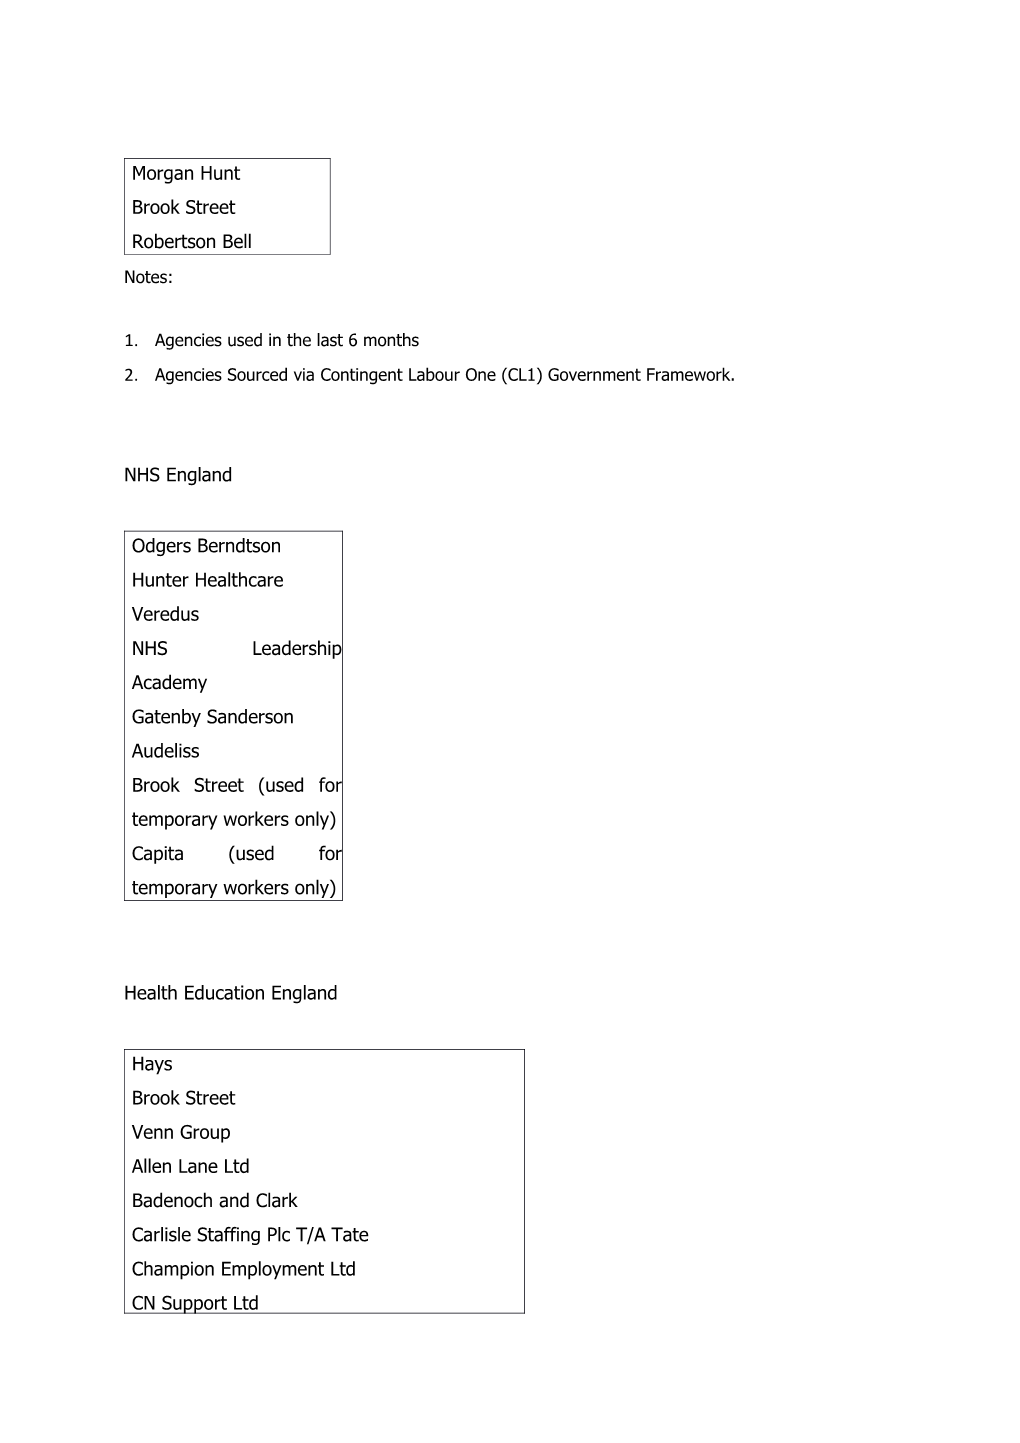 Ndpbs - Recruitment Agencies Table 28Th Feb